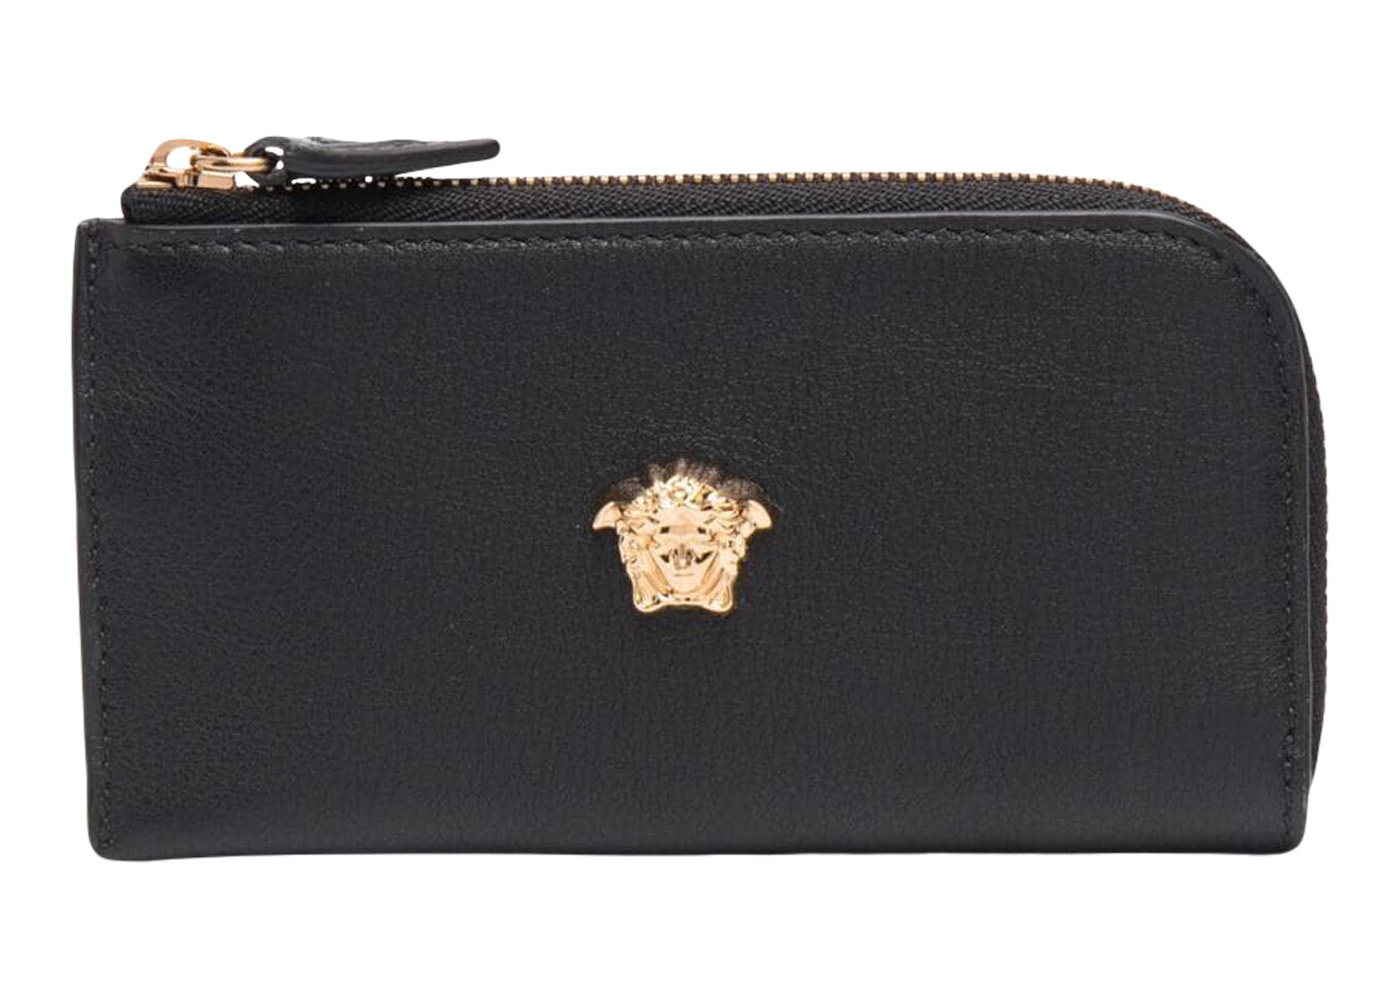 Versace Large Black and Gold Print Nylon Stampato Tote Bag Shoulder Handbag  - Walmart.com